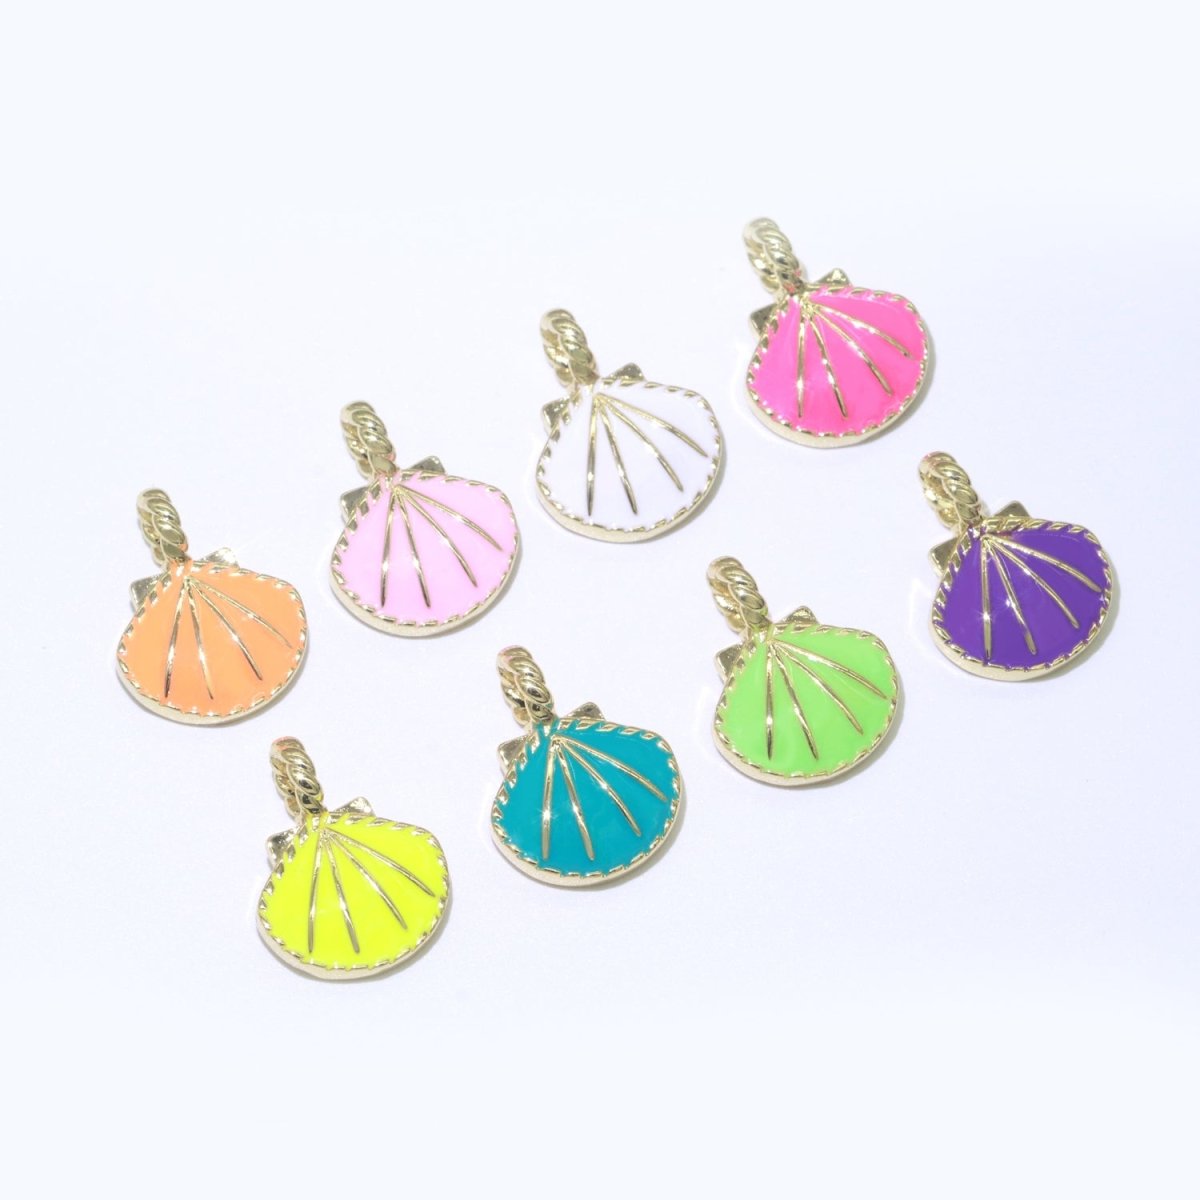 Dainty Enamel Sea Shell Charm, Seashell Charm, Oyster Necklace Pendant, Under the sea Beach Jewelry Inspired Pink Green Orange Purple Charm J-870~J-877 - DLUXCA